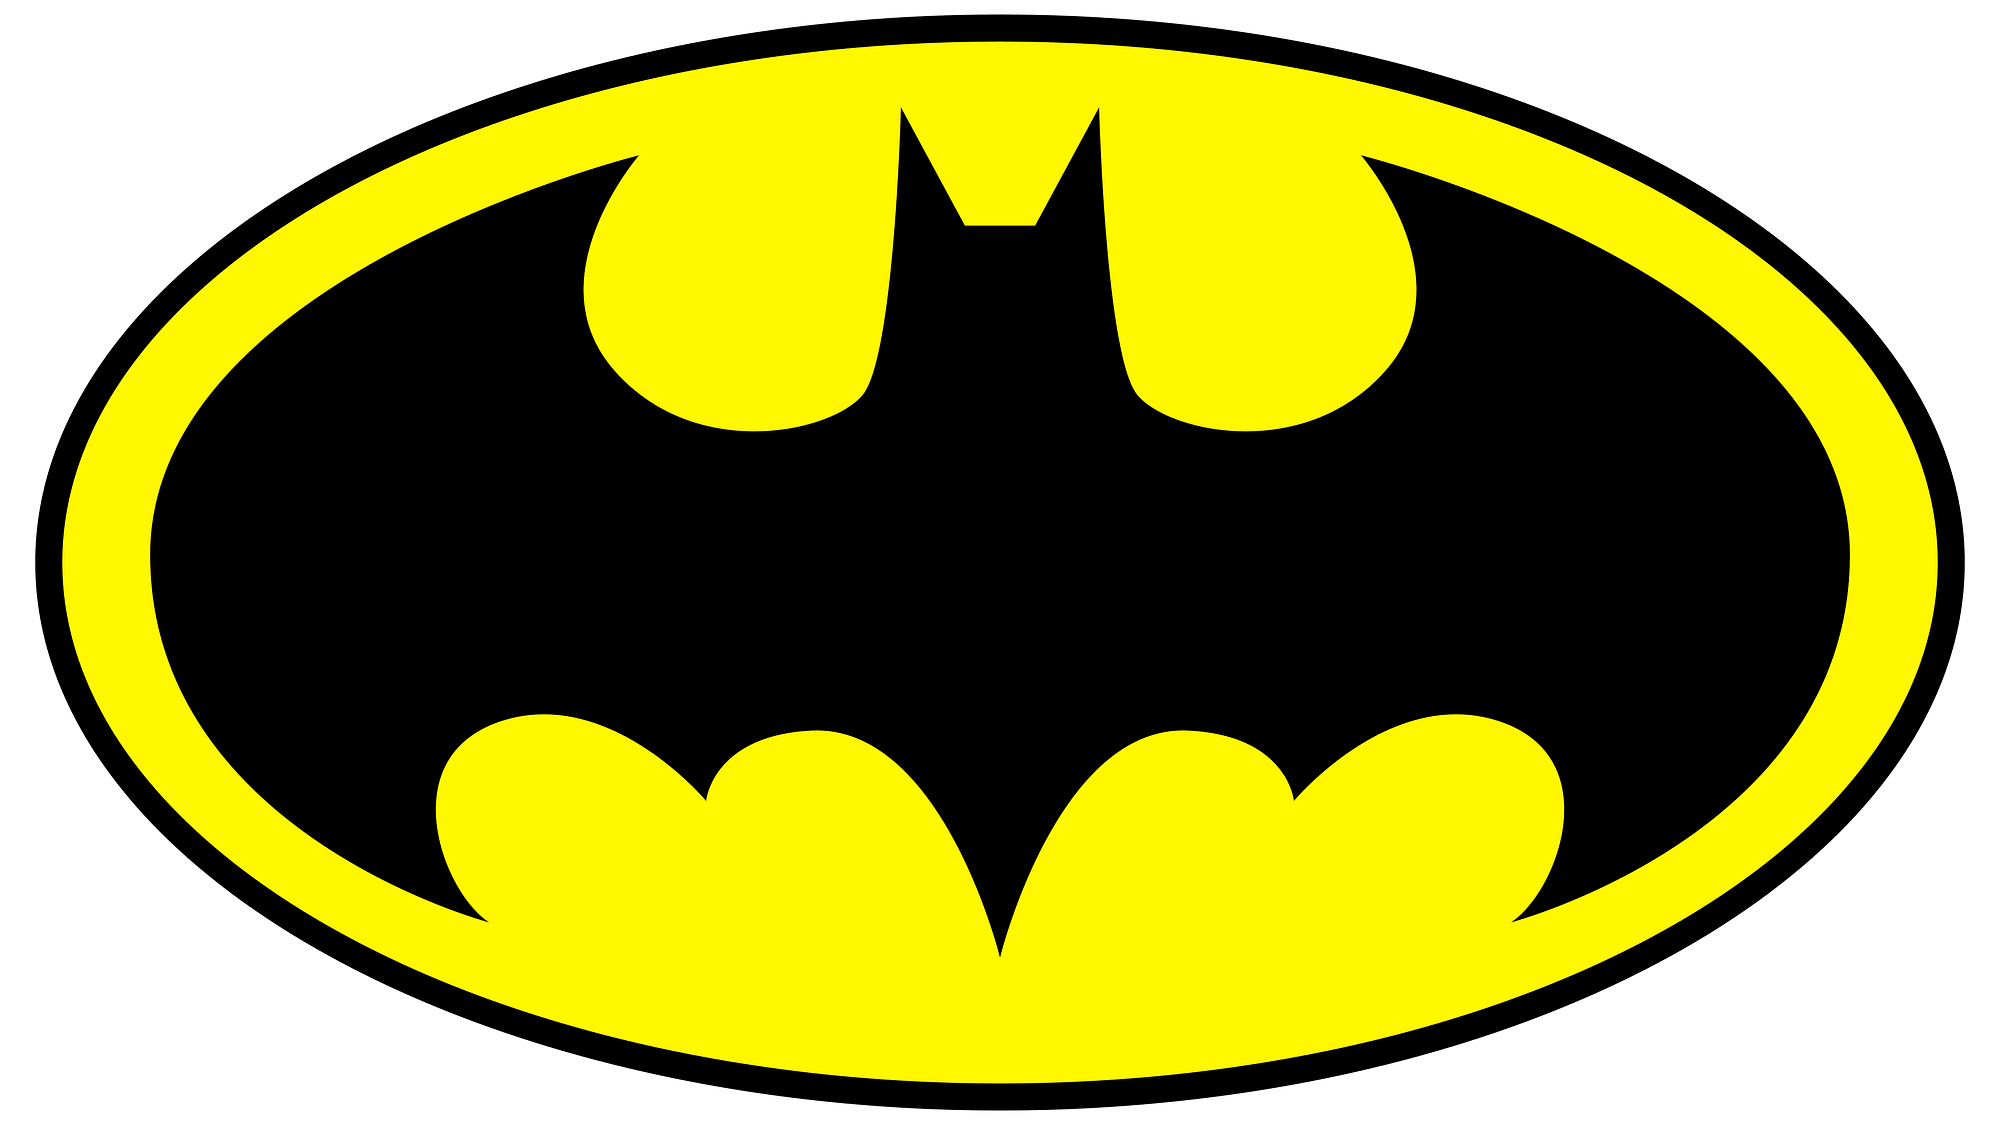 The Batman symbol is a well known logomark.